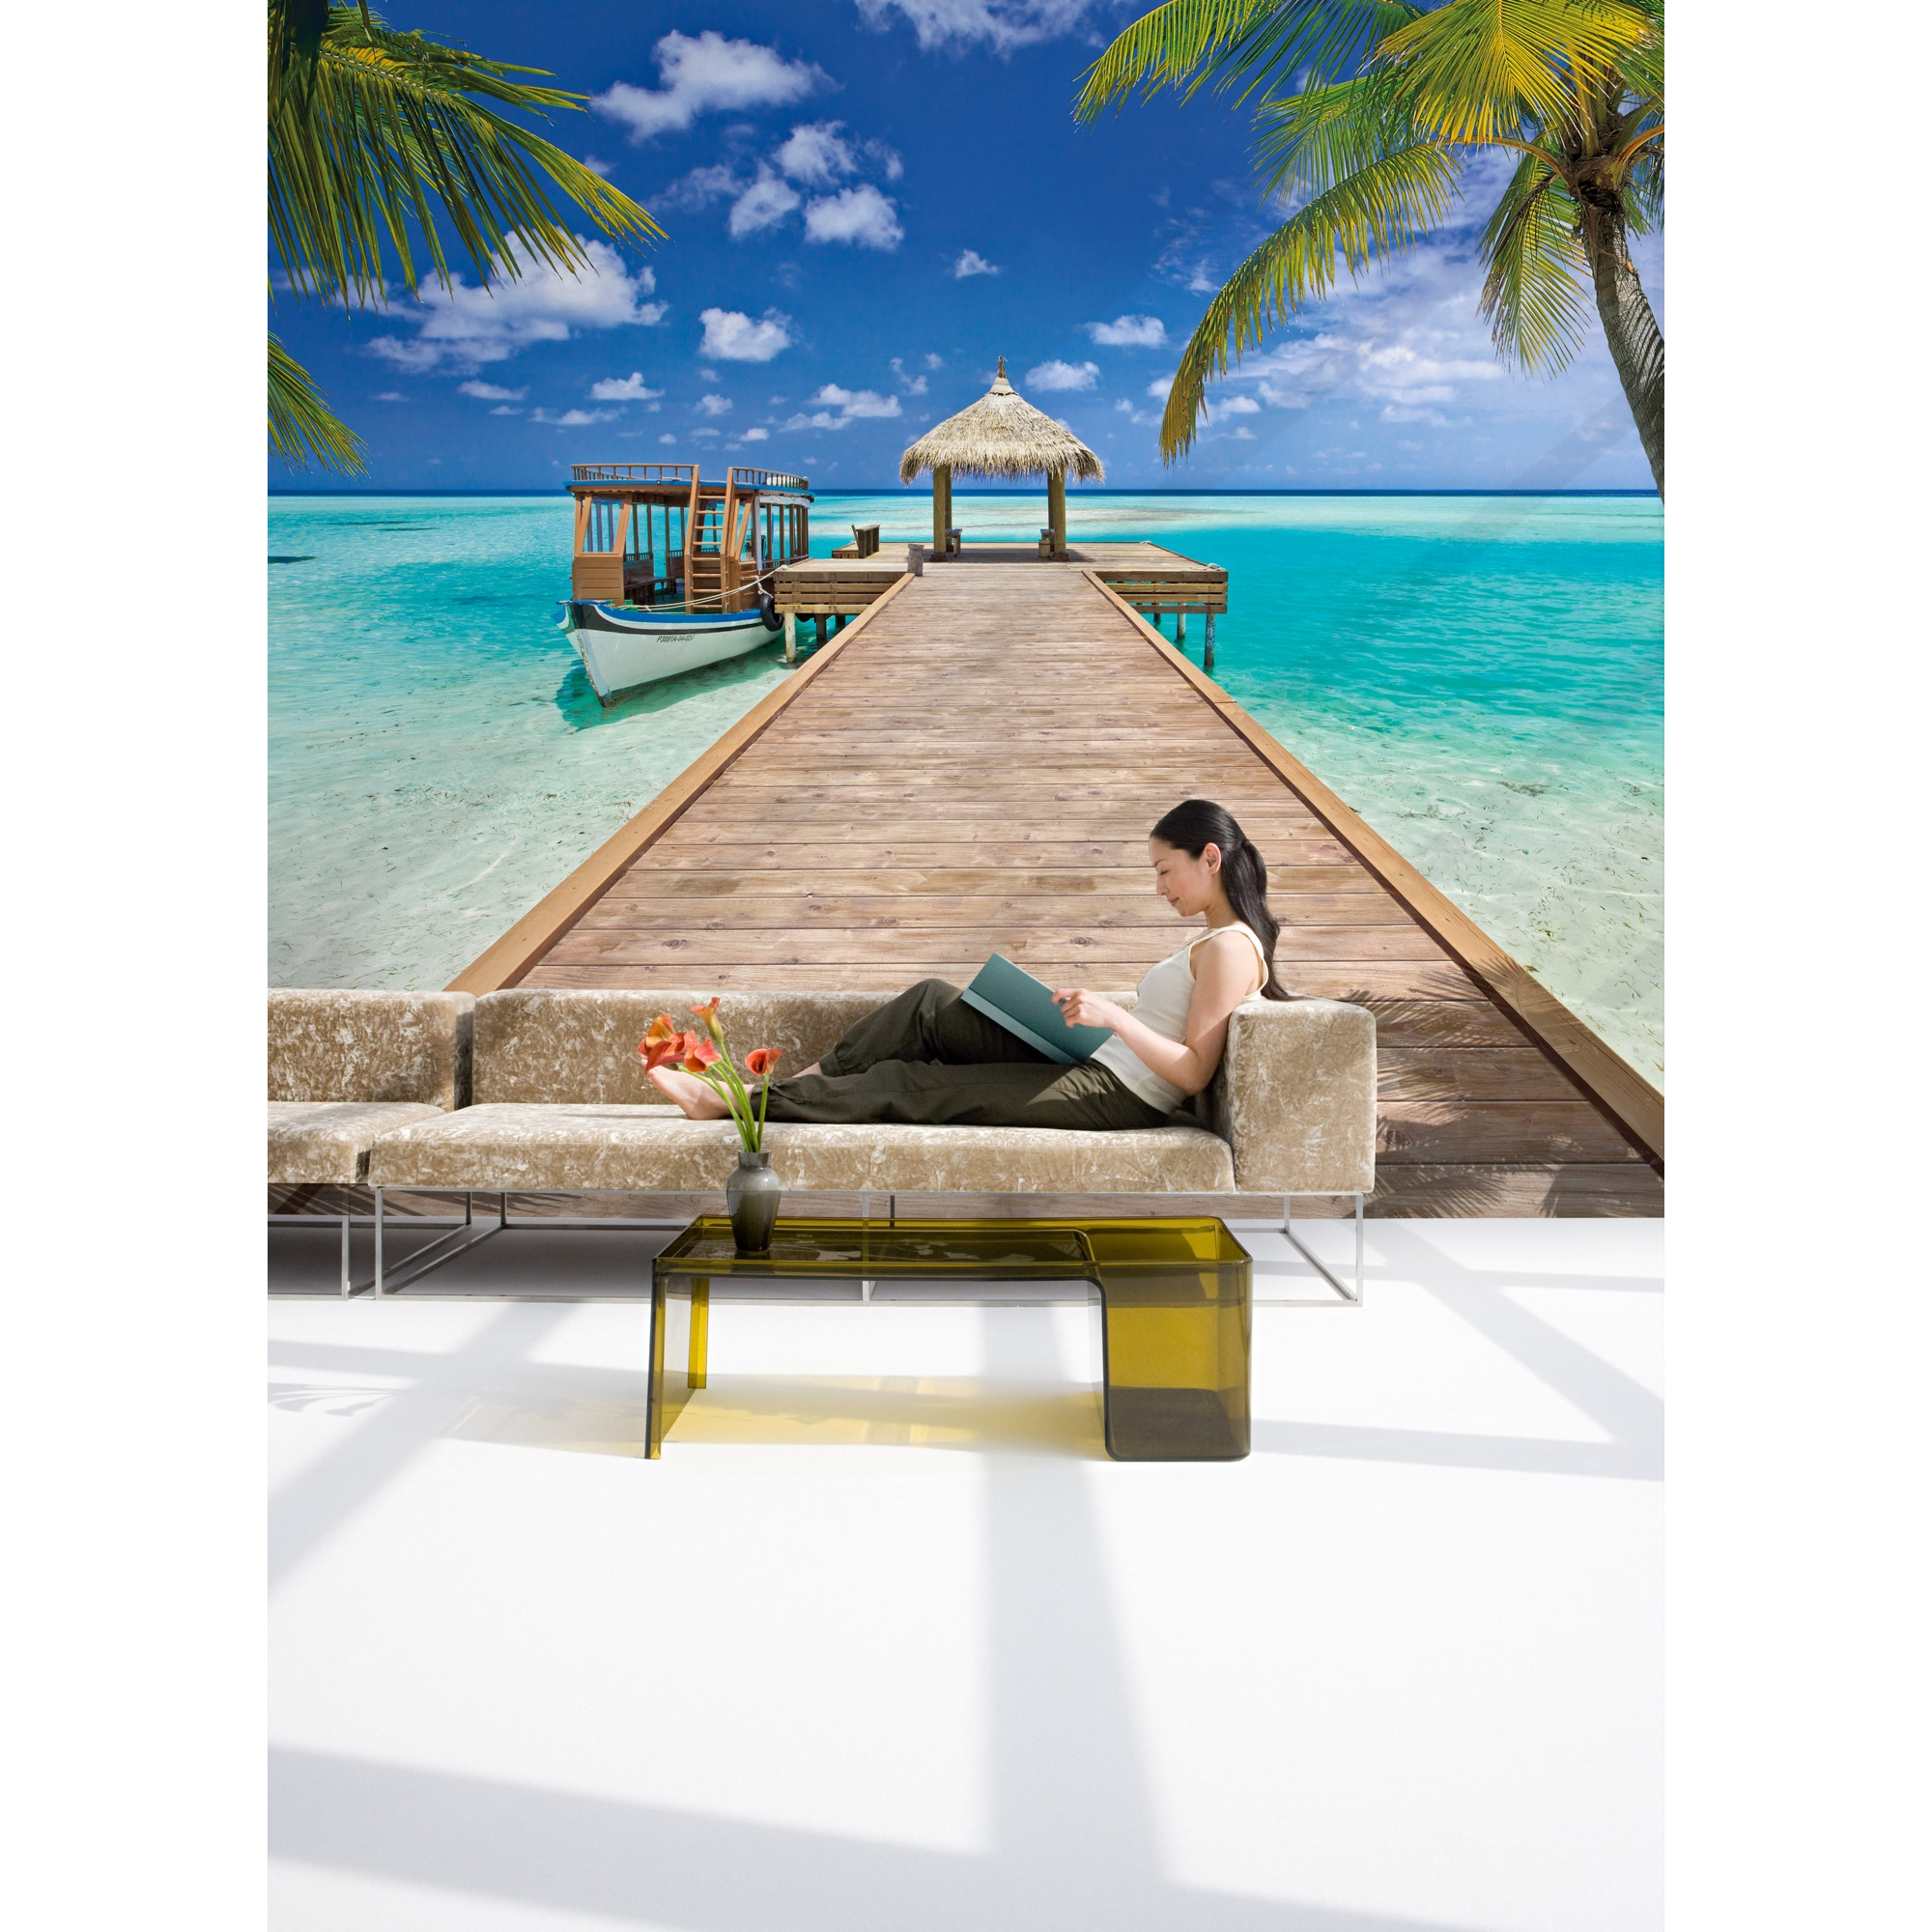 Fototapete 'Beach Resort' 368 x 254 cm + product picture